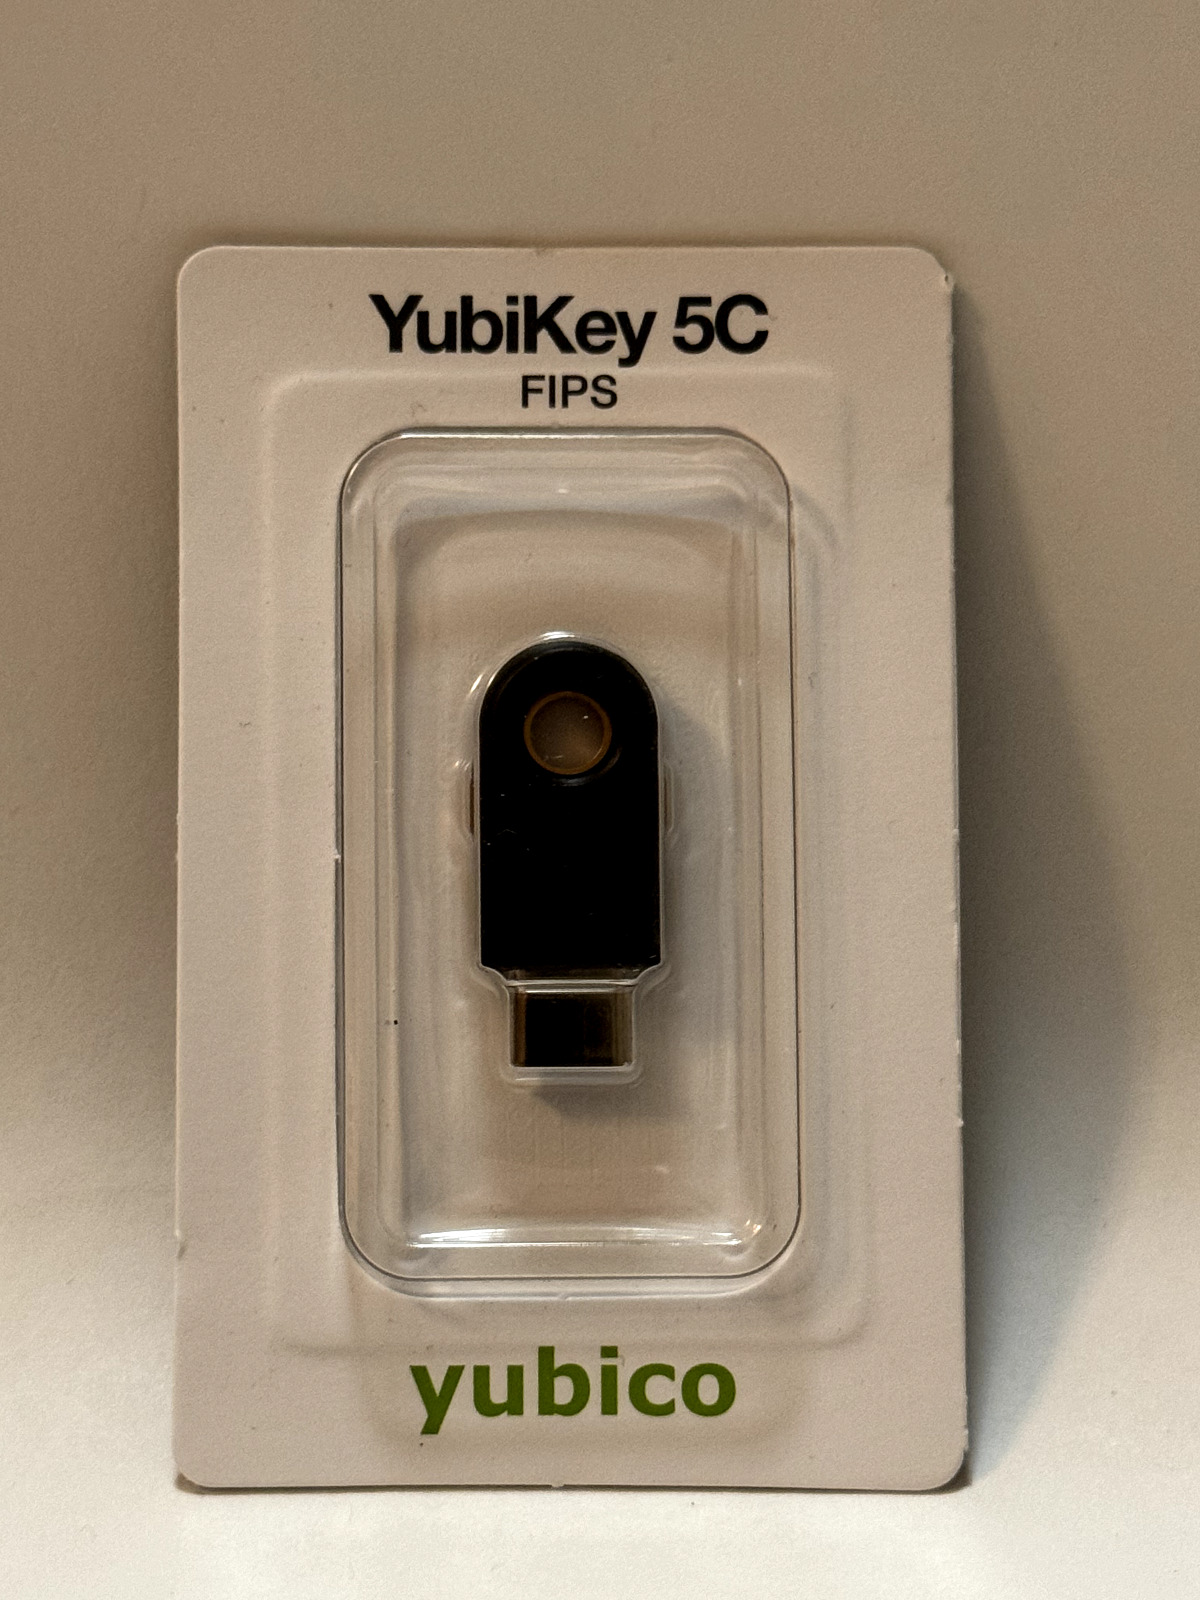 Yubico Yubikey 5C FIPS - Security Key - New, Unopened